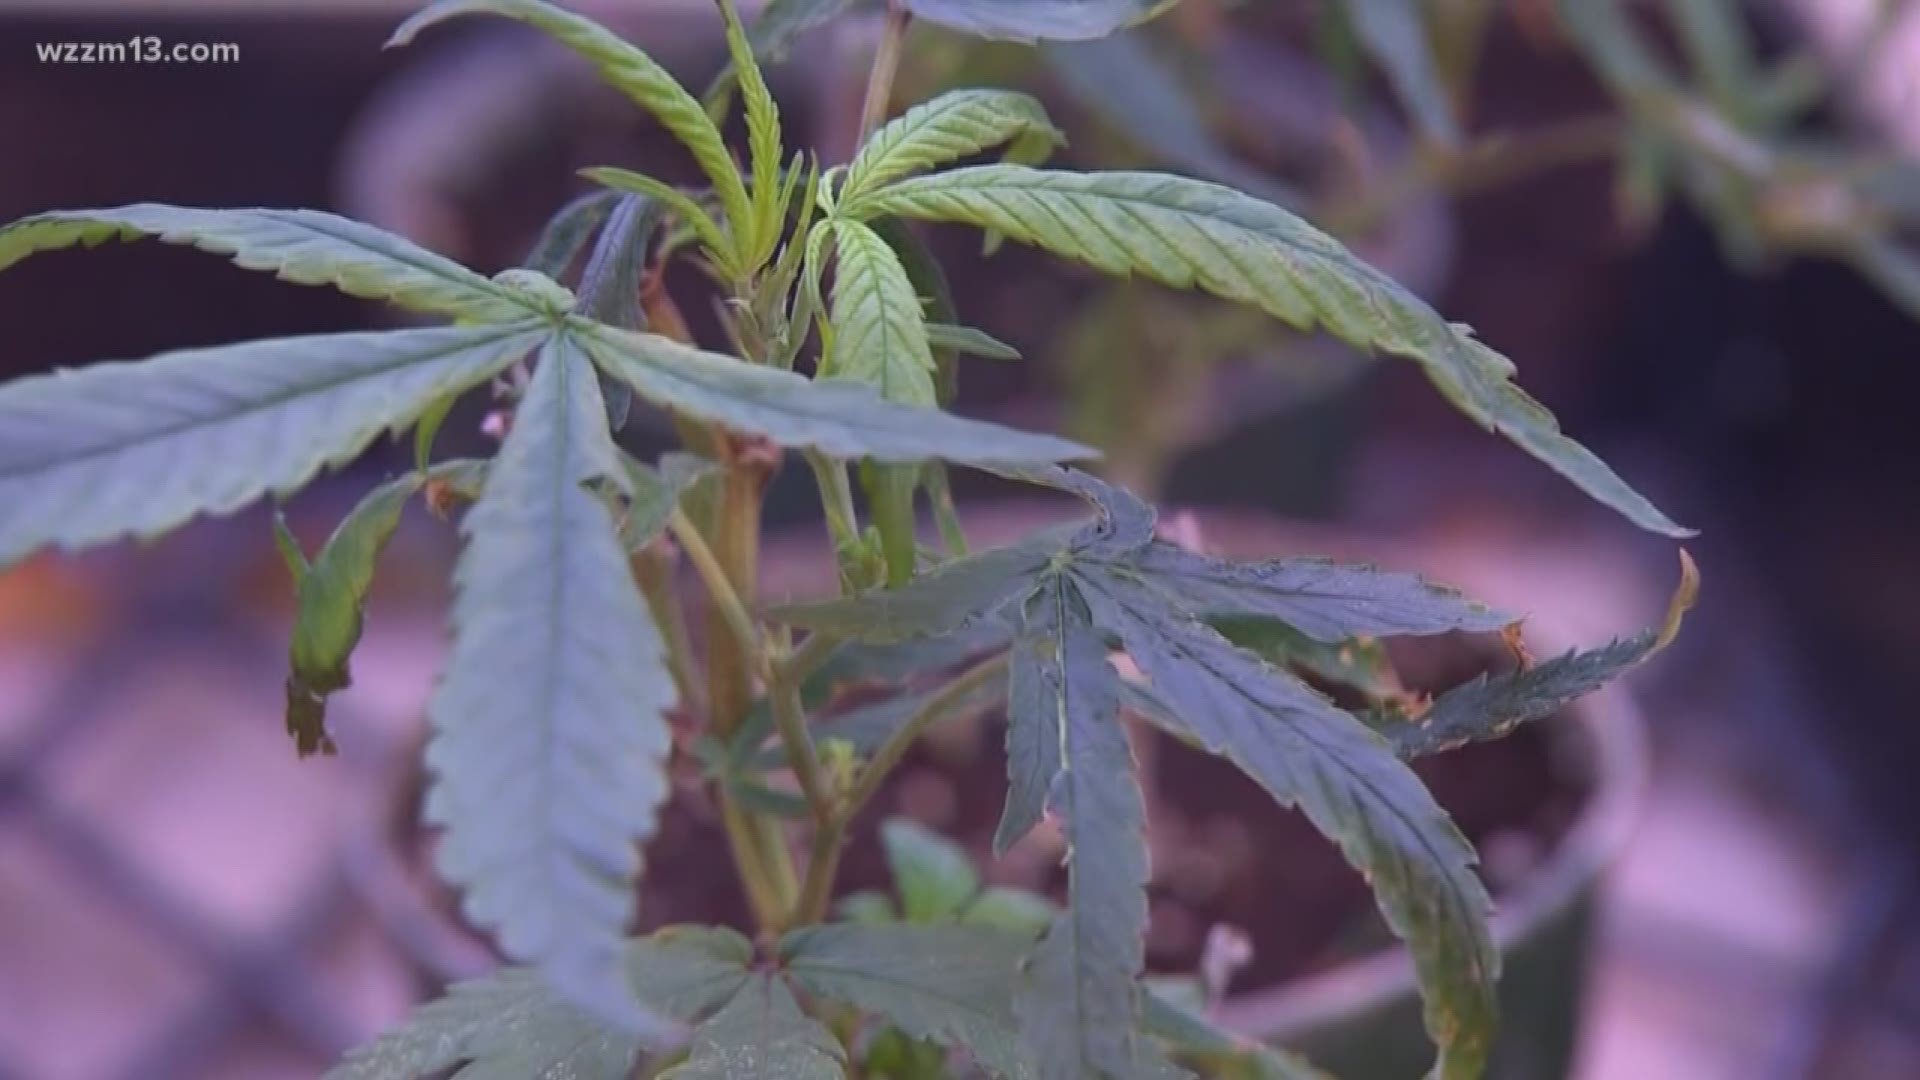 Grand Rapids leaders look at medical marijuana proposals